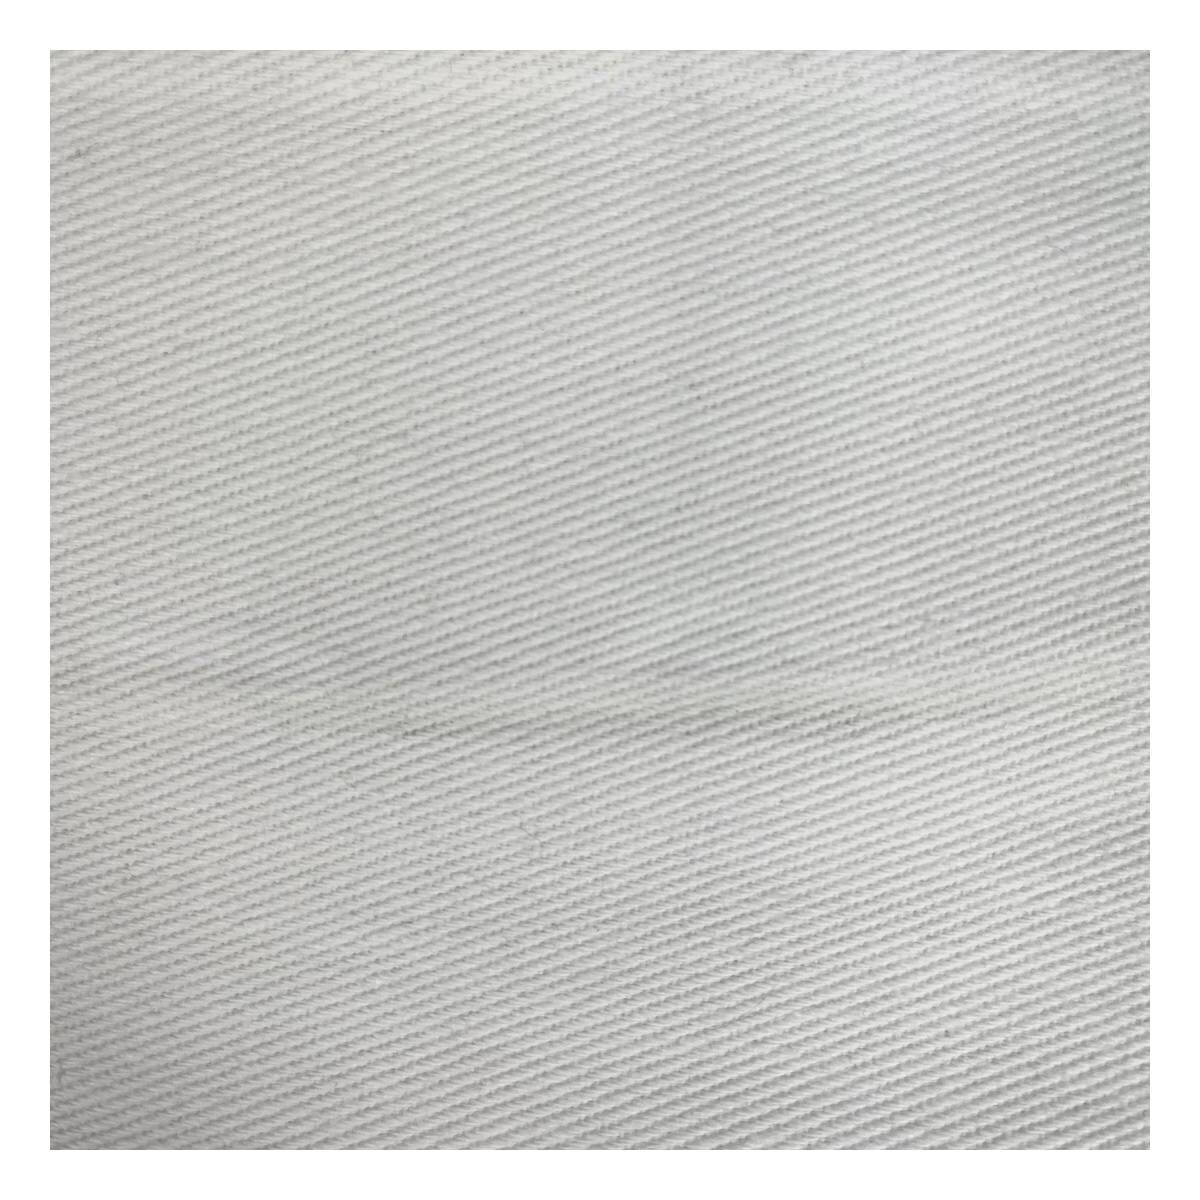 Cream Drill Fabric by the Metre | Hobbycraft